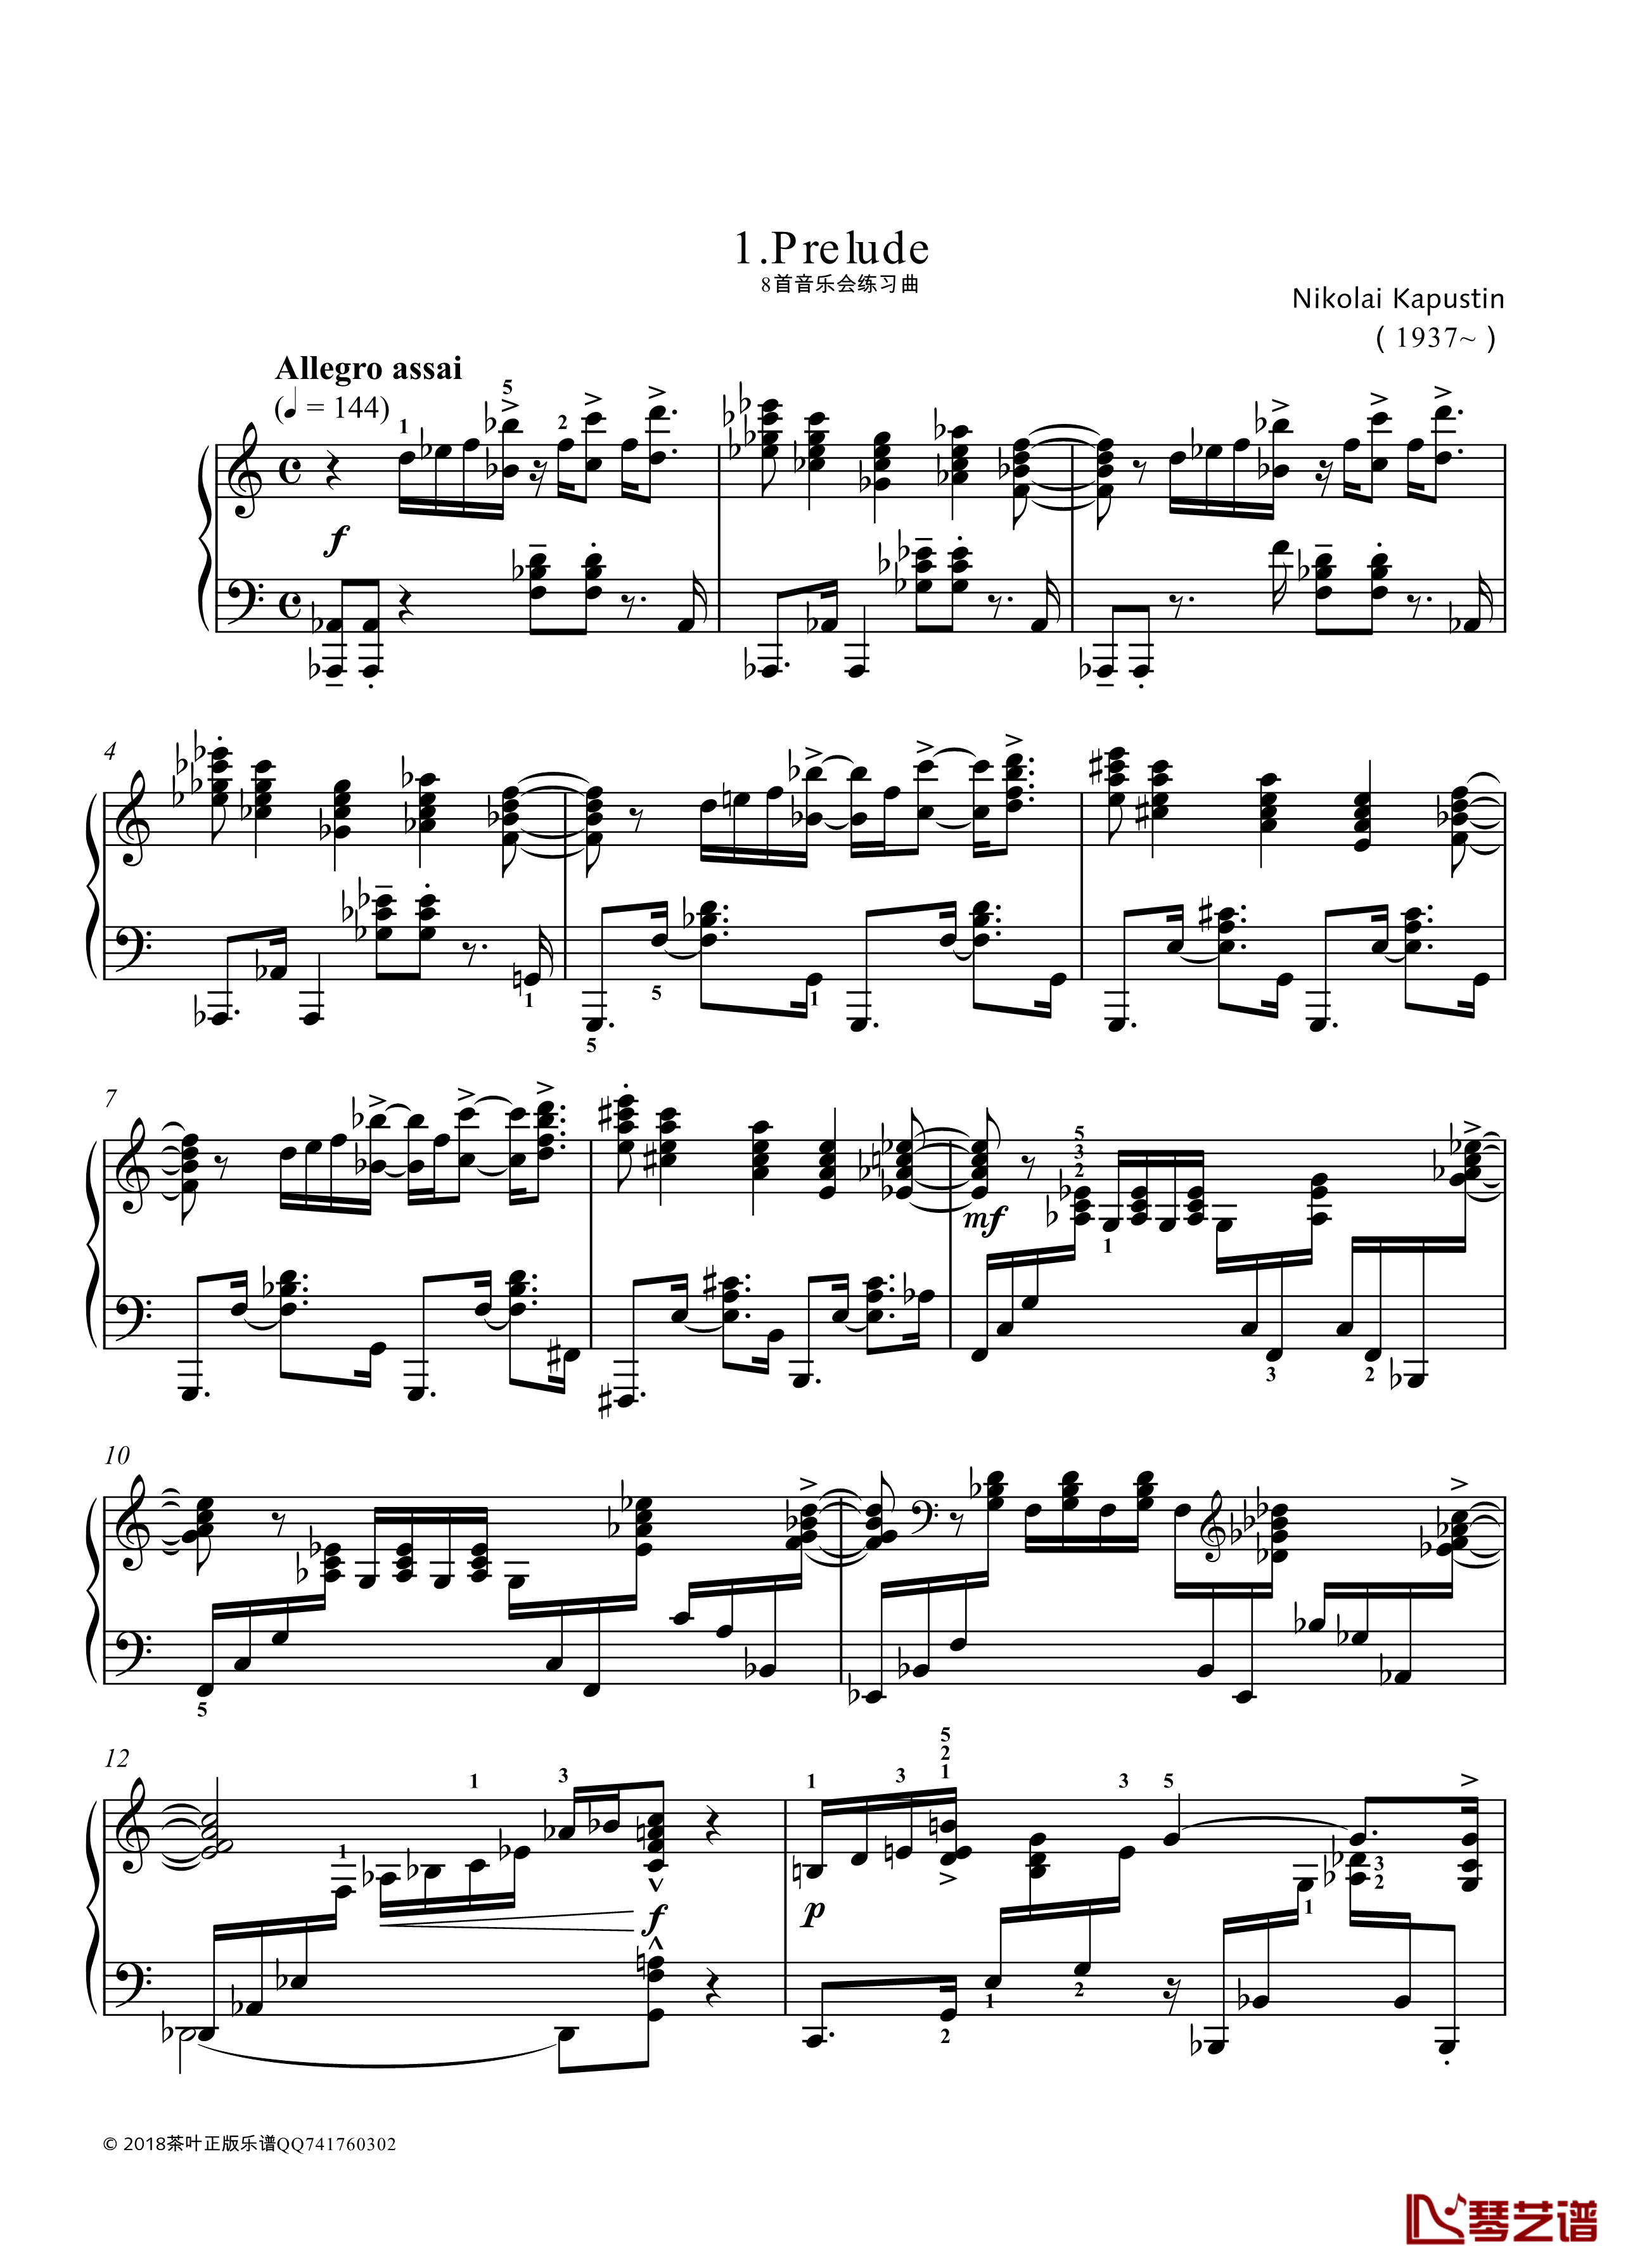 1. Prelude钢琴谱-带指法-八首音乐会练习曲-Eight Concert ?tudes Op 40 - No. -爵士-尼古拉·凯帕斯汀1